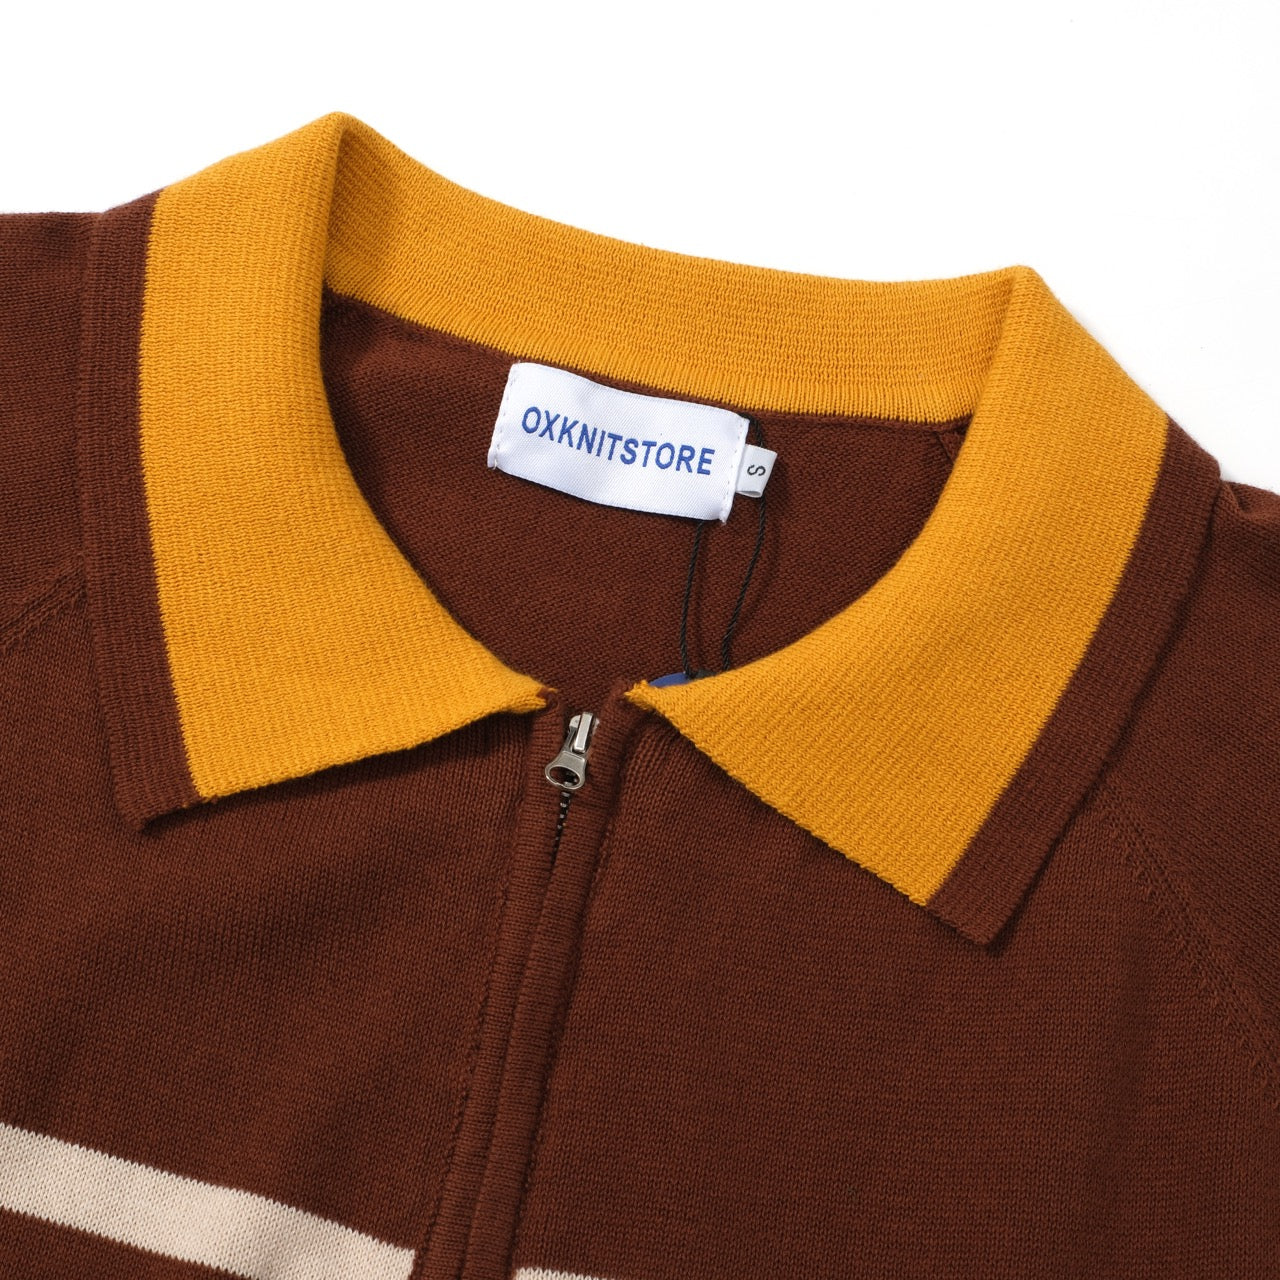 OXKNIT Men Vintage Clothing 1960s Mod Style Casual Stripe Zip Neck Retro Polo Shirt